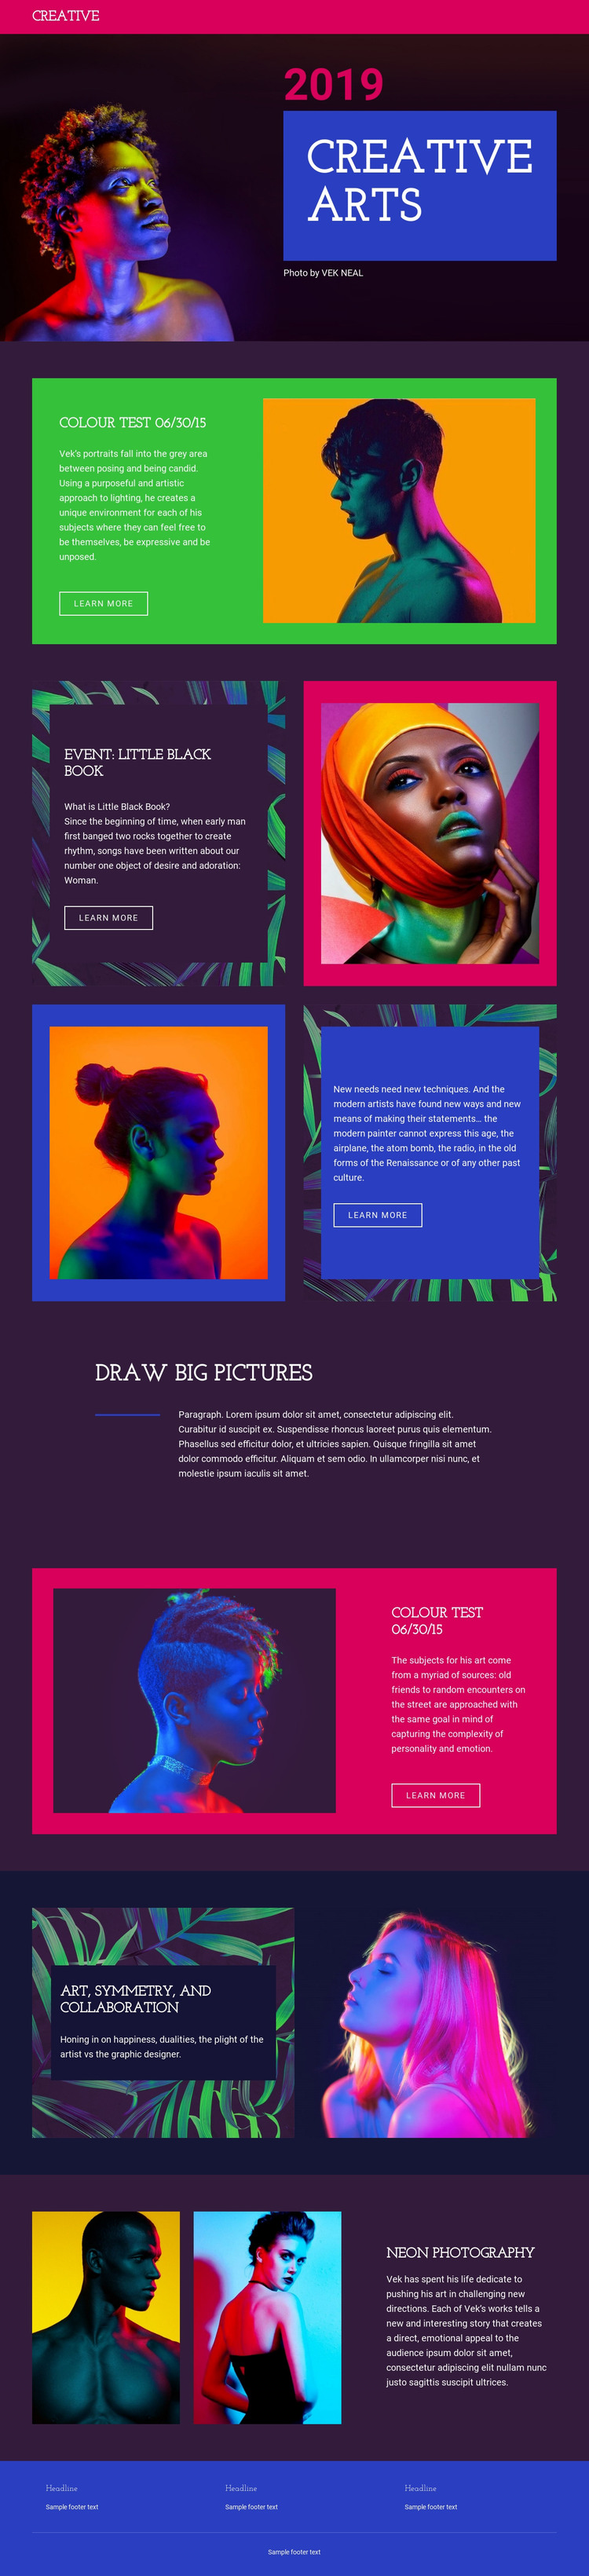 Creative Arts Homepage Design